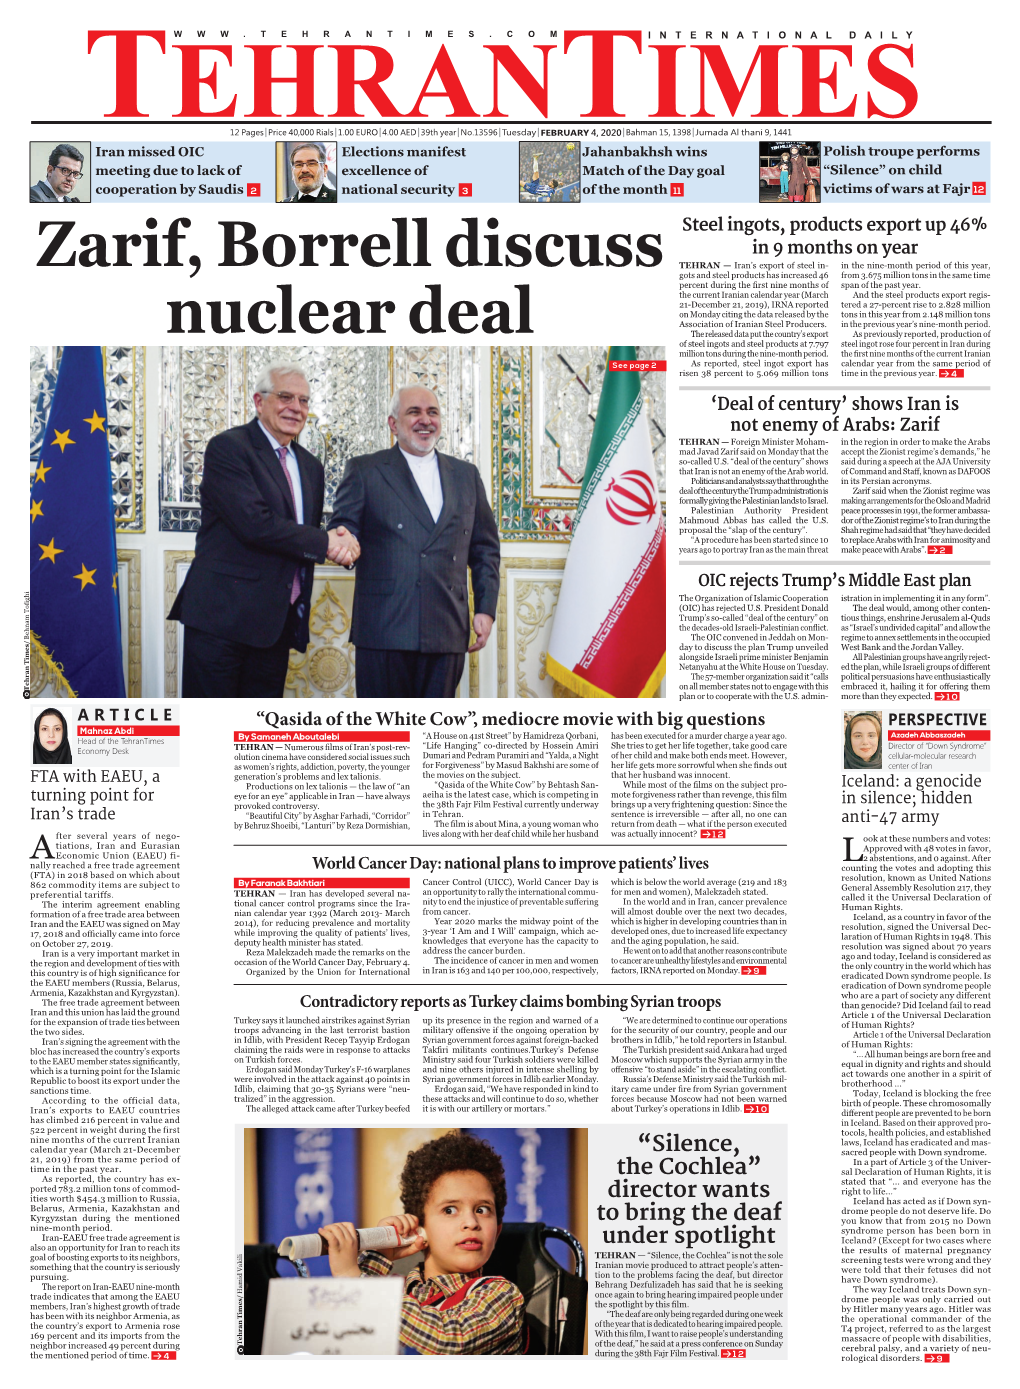 Zarif, Borrell Discuss Nuclear Deal